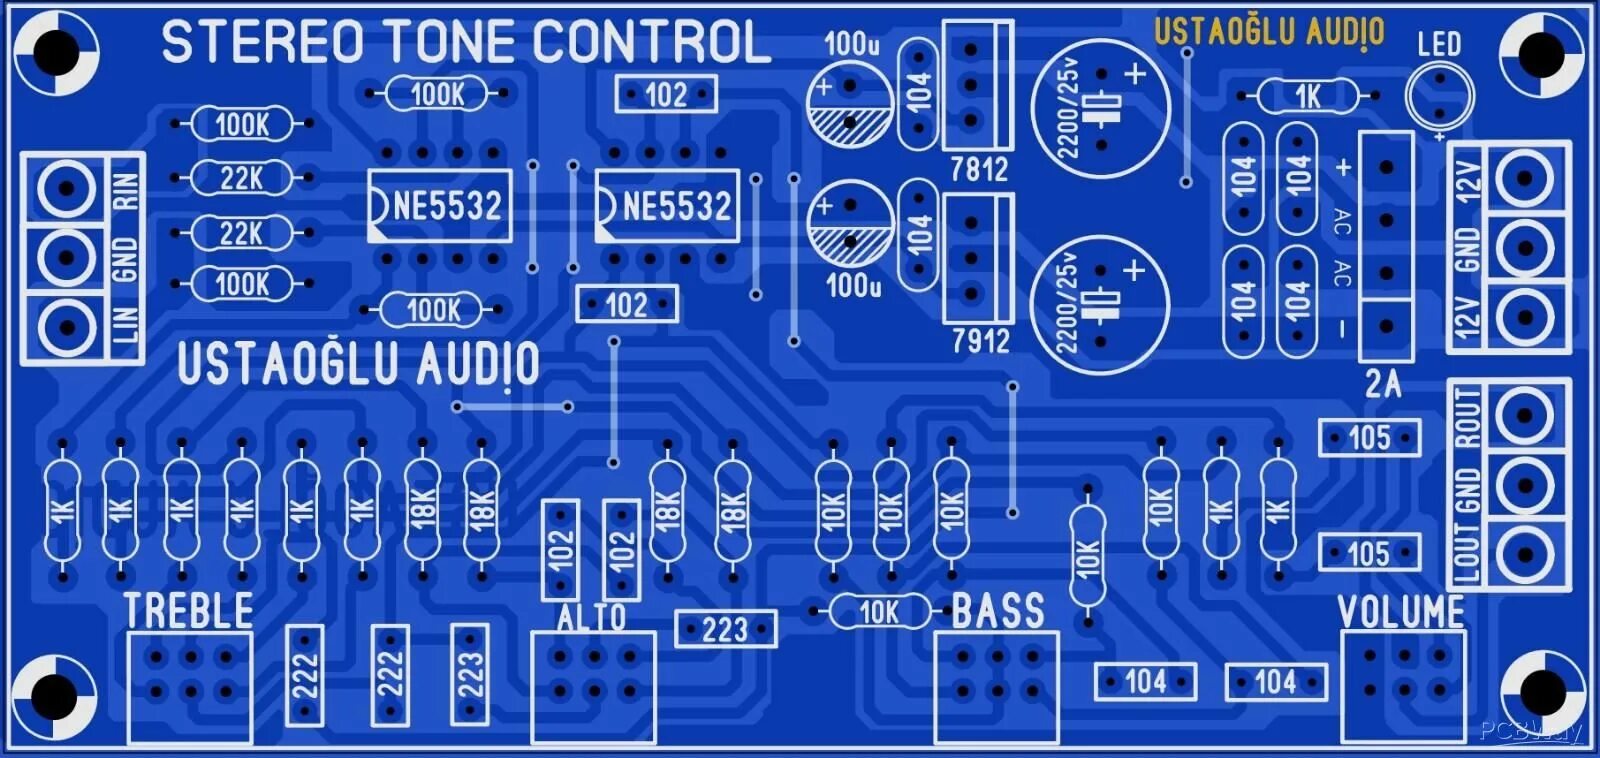 Stereo Tone Control ne5532.. Ne5532. Транзисторная сборка ne5532. Stereo Tone Control diagram circuit.